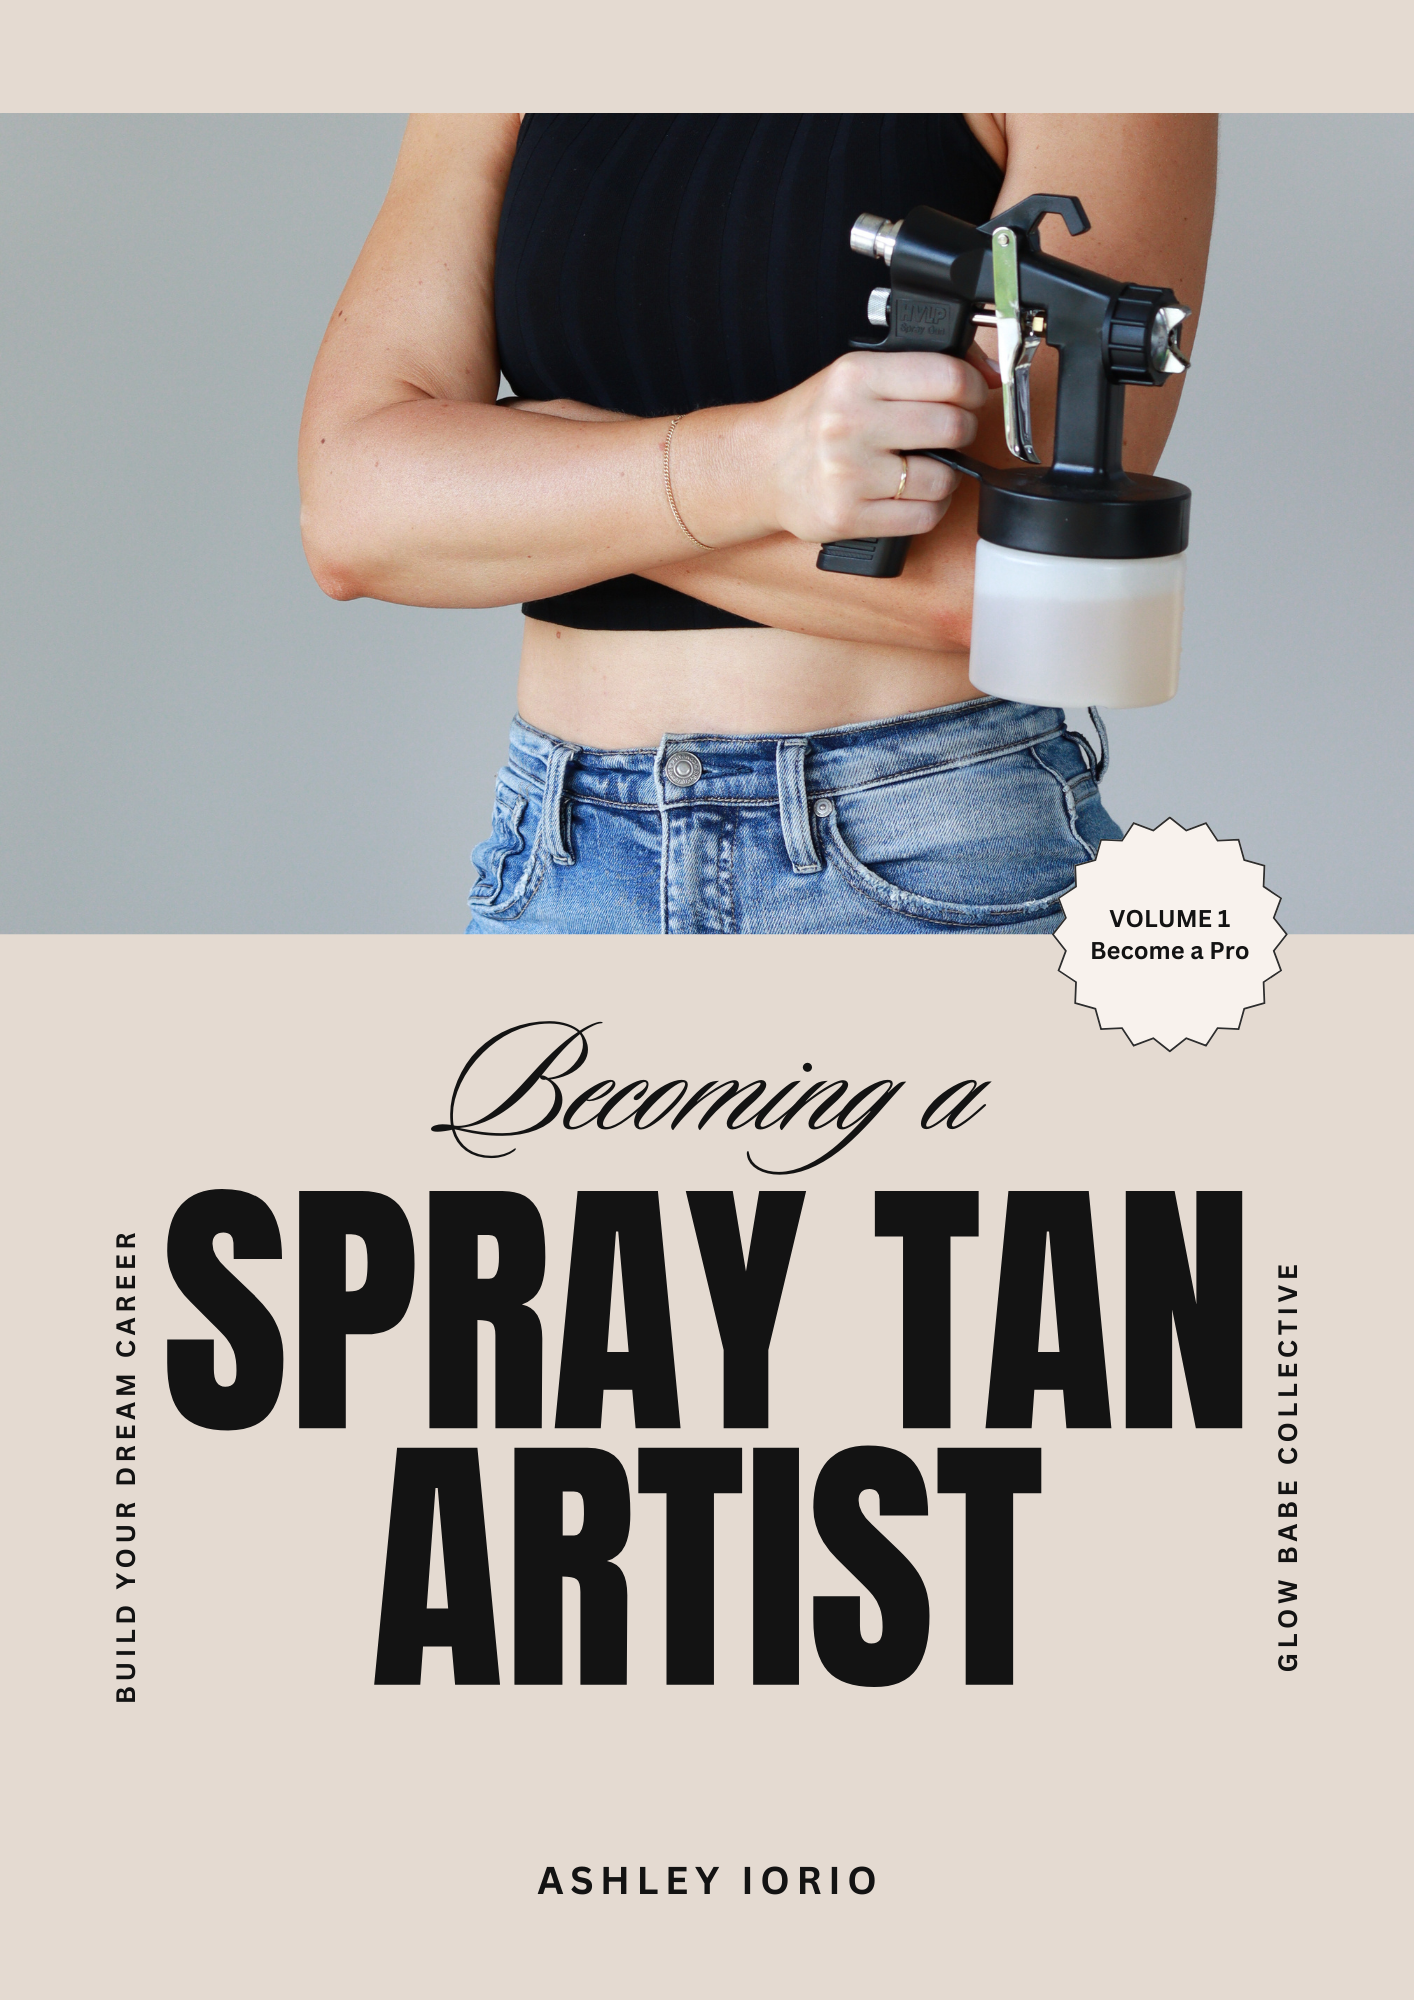 Certification Spray Tan Artist: In-Person Training